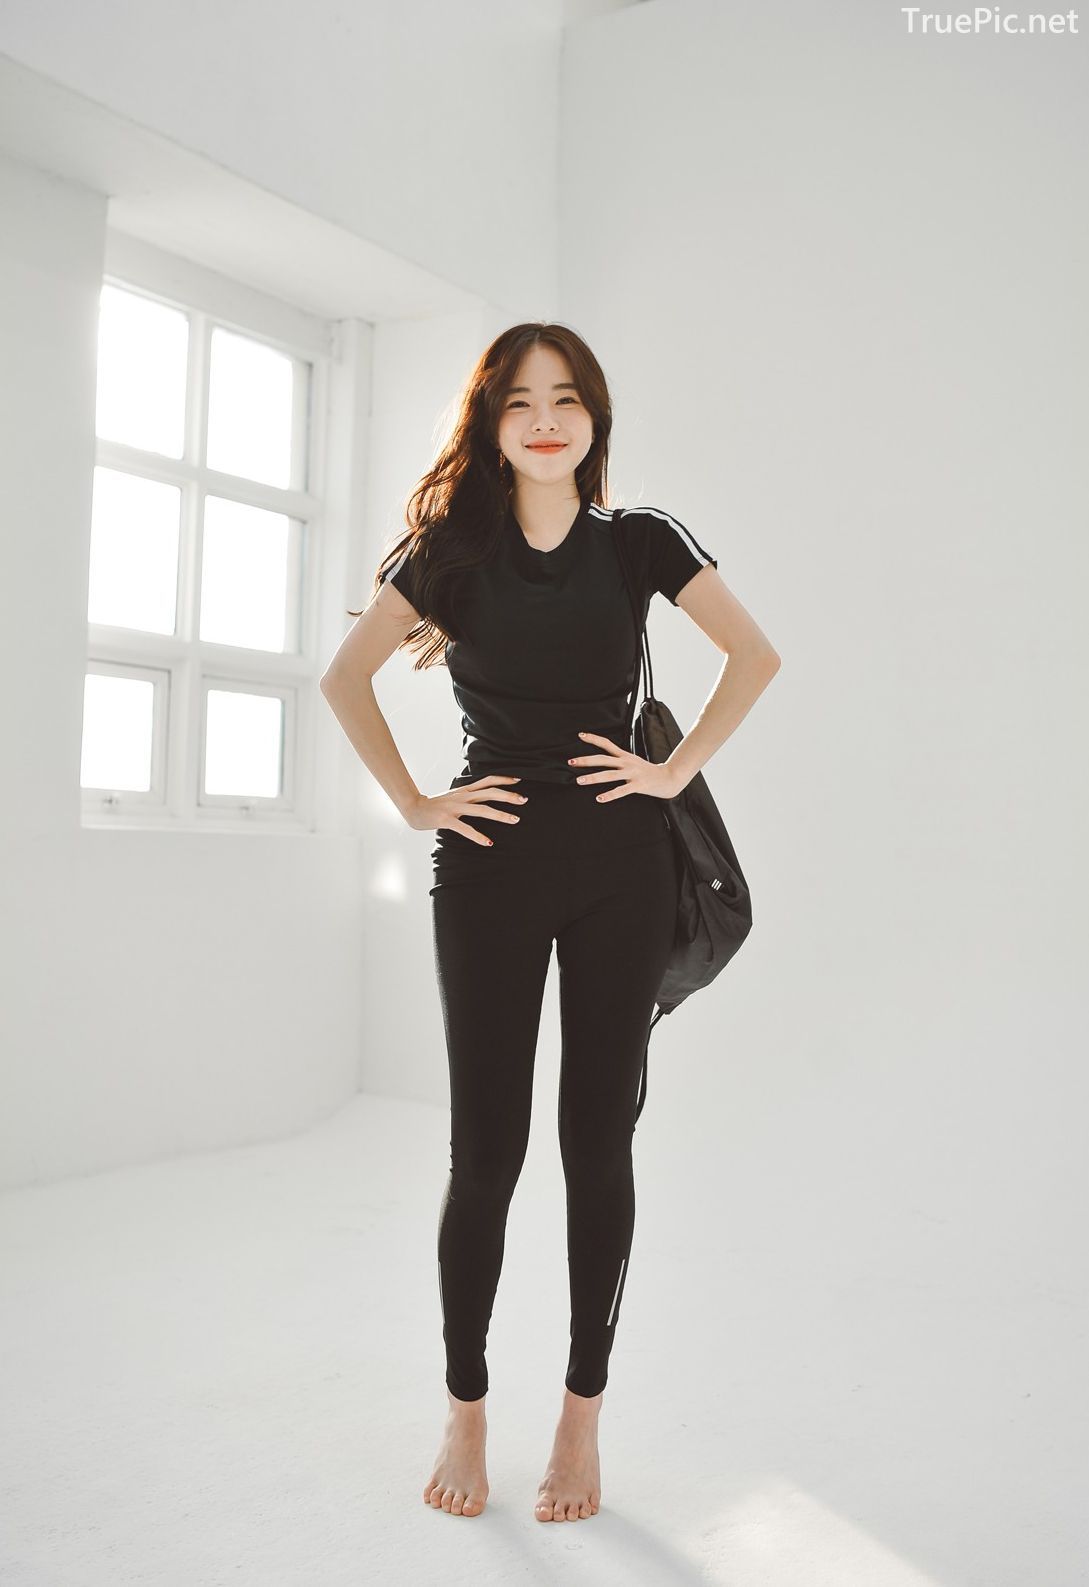 Korean Lingerie Queen - Haneul - Fitness Set Collection - TruePic.net - Picture 69